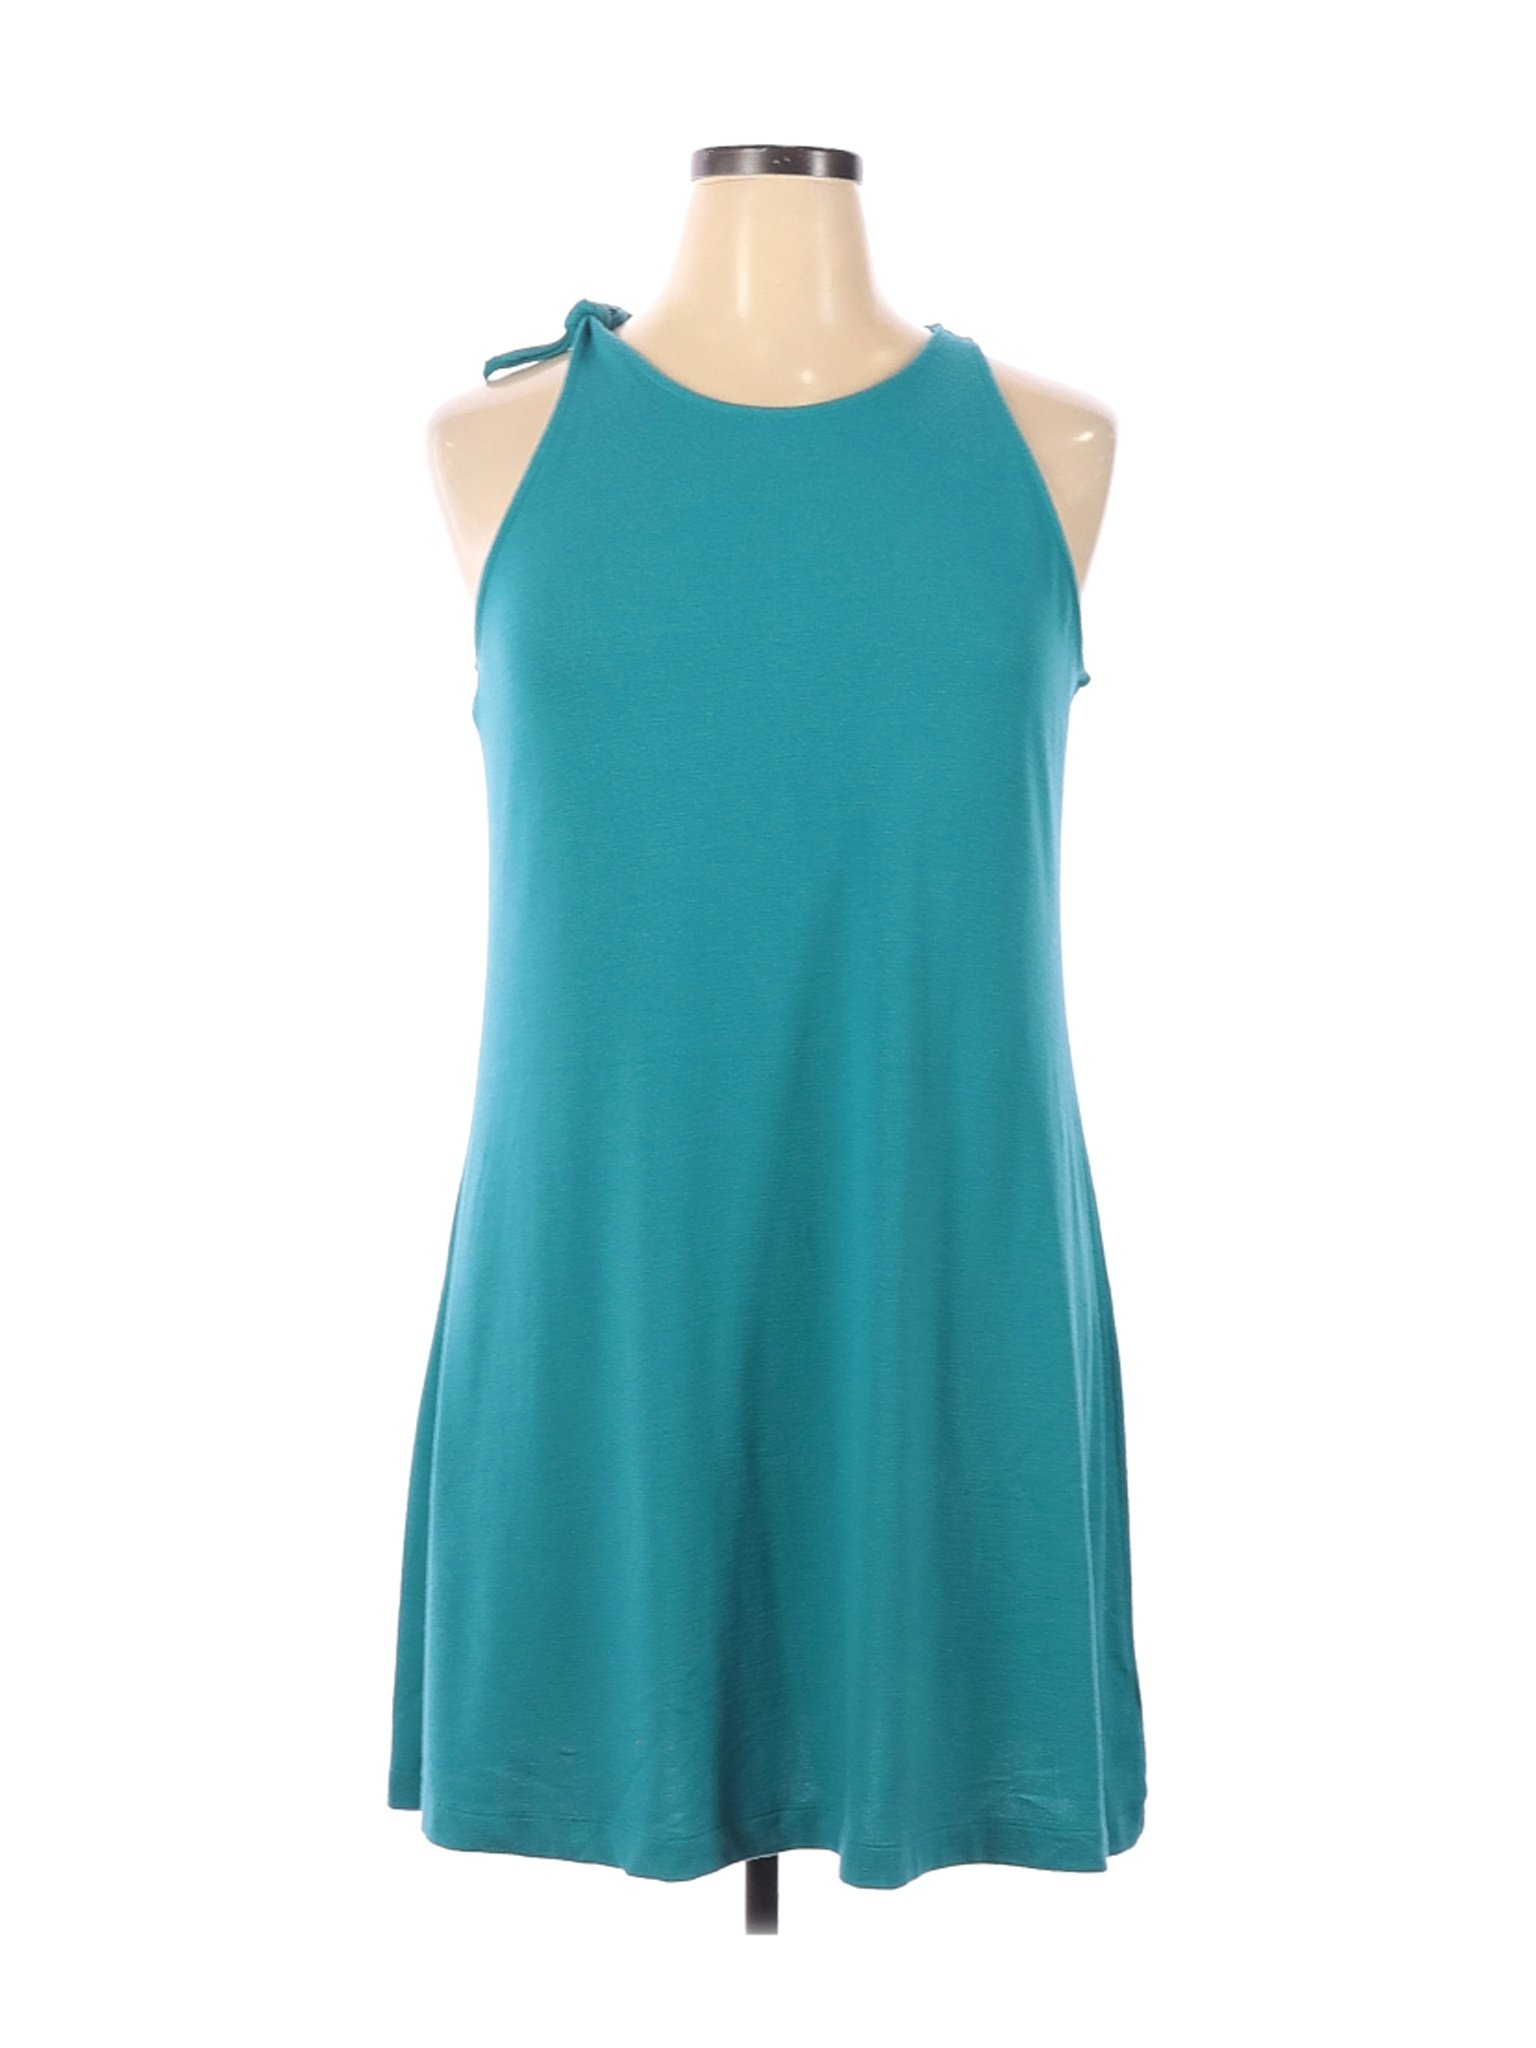 Gap Women Green Casual Dress XL | eBay